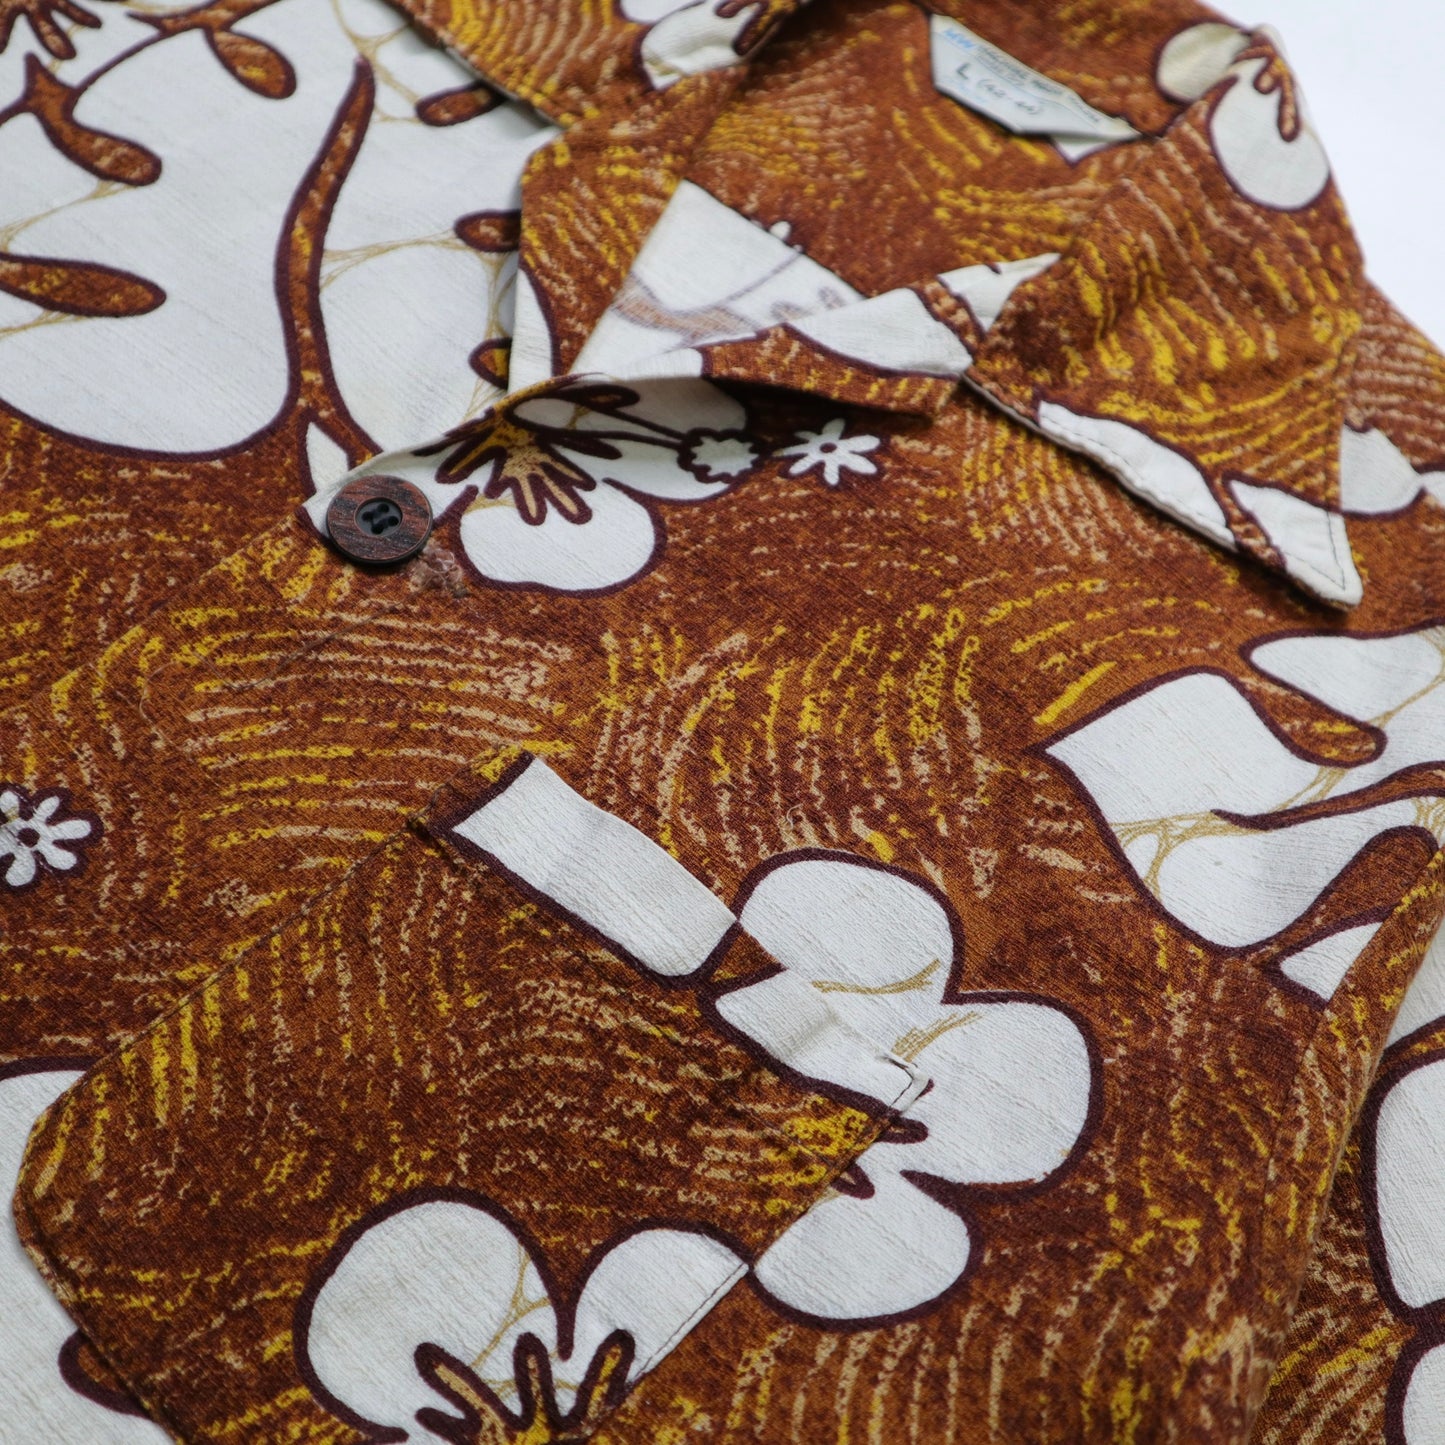 70s JC PENNEY 棕櫚葉與扶桑花樹皮棉夏威夷襯衫